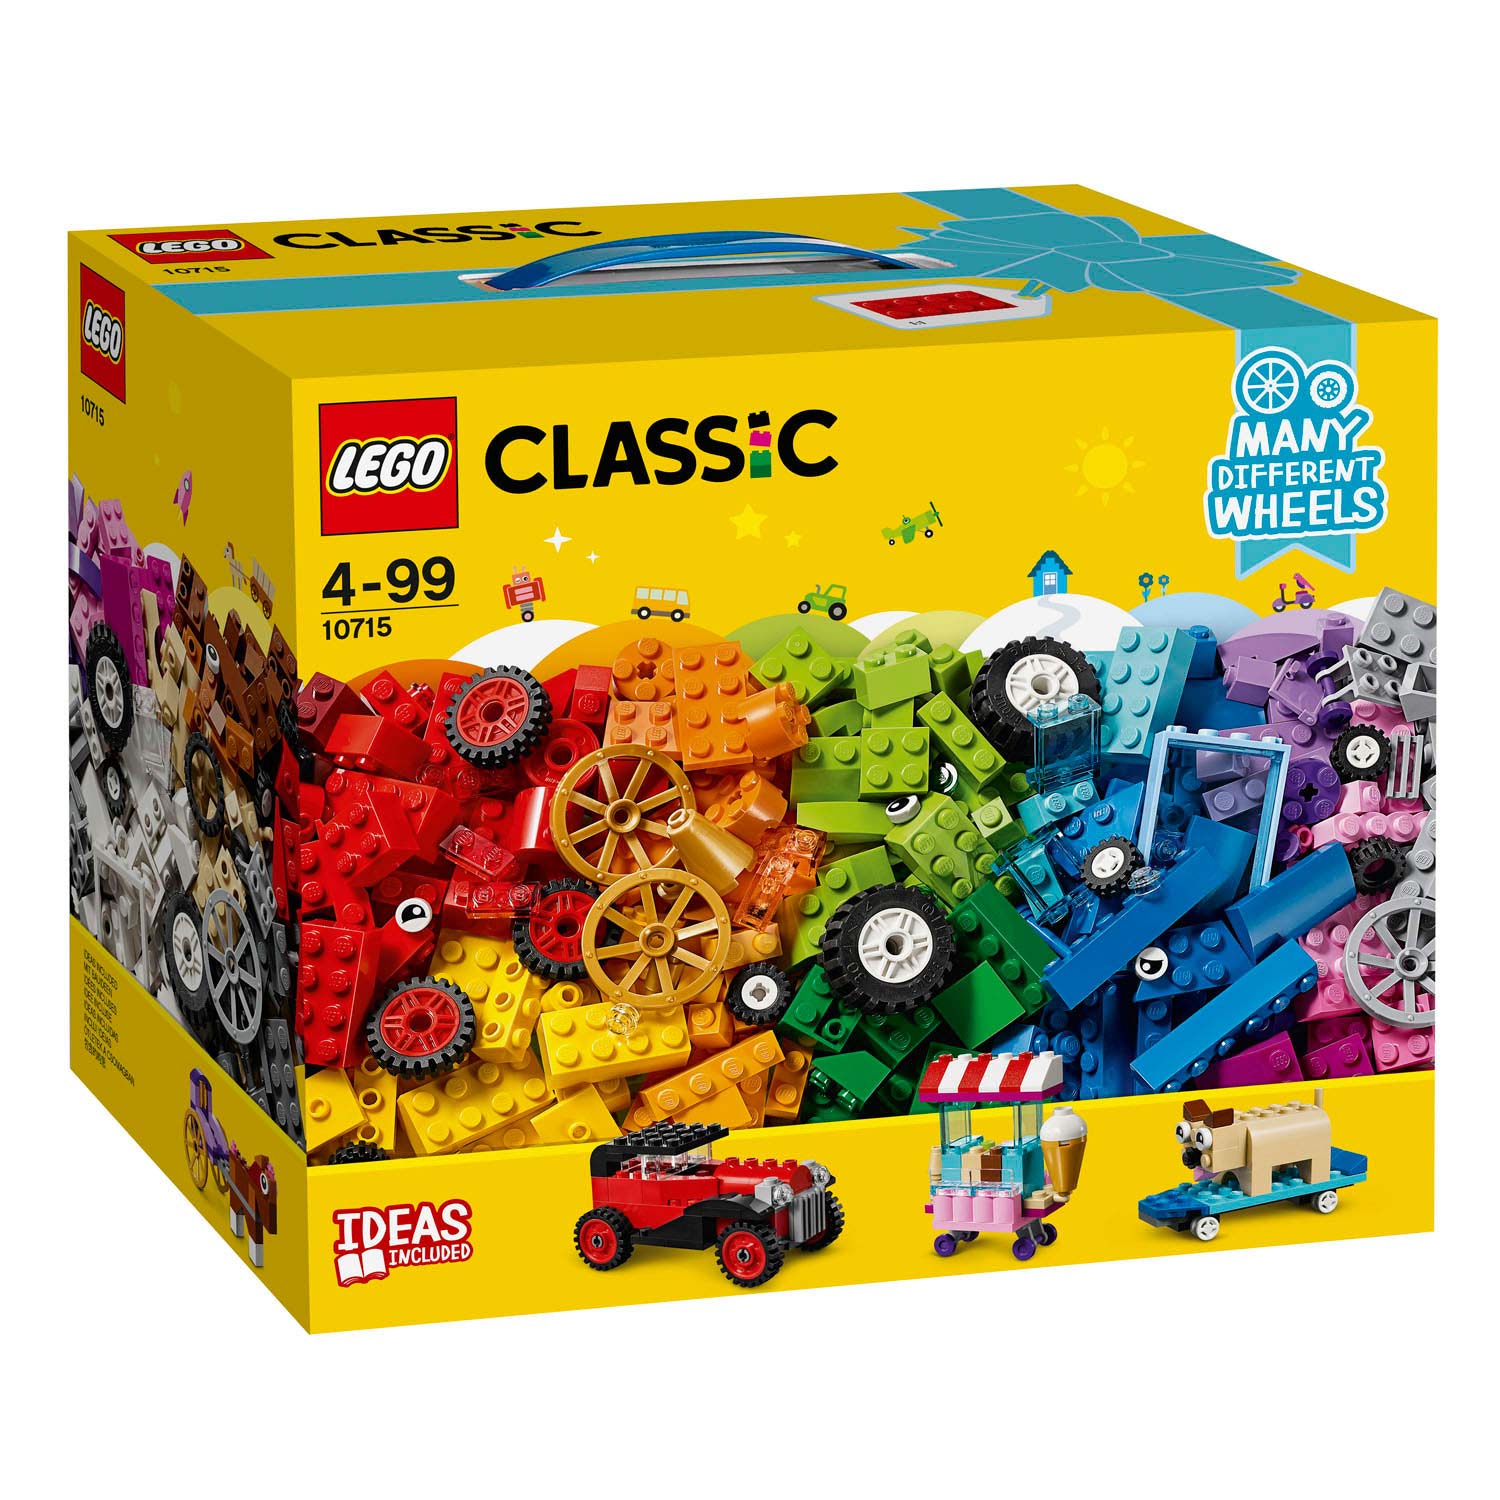 LEGO Classic 10715 Stenen op wielen